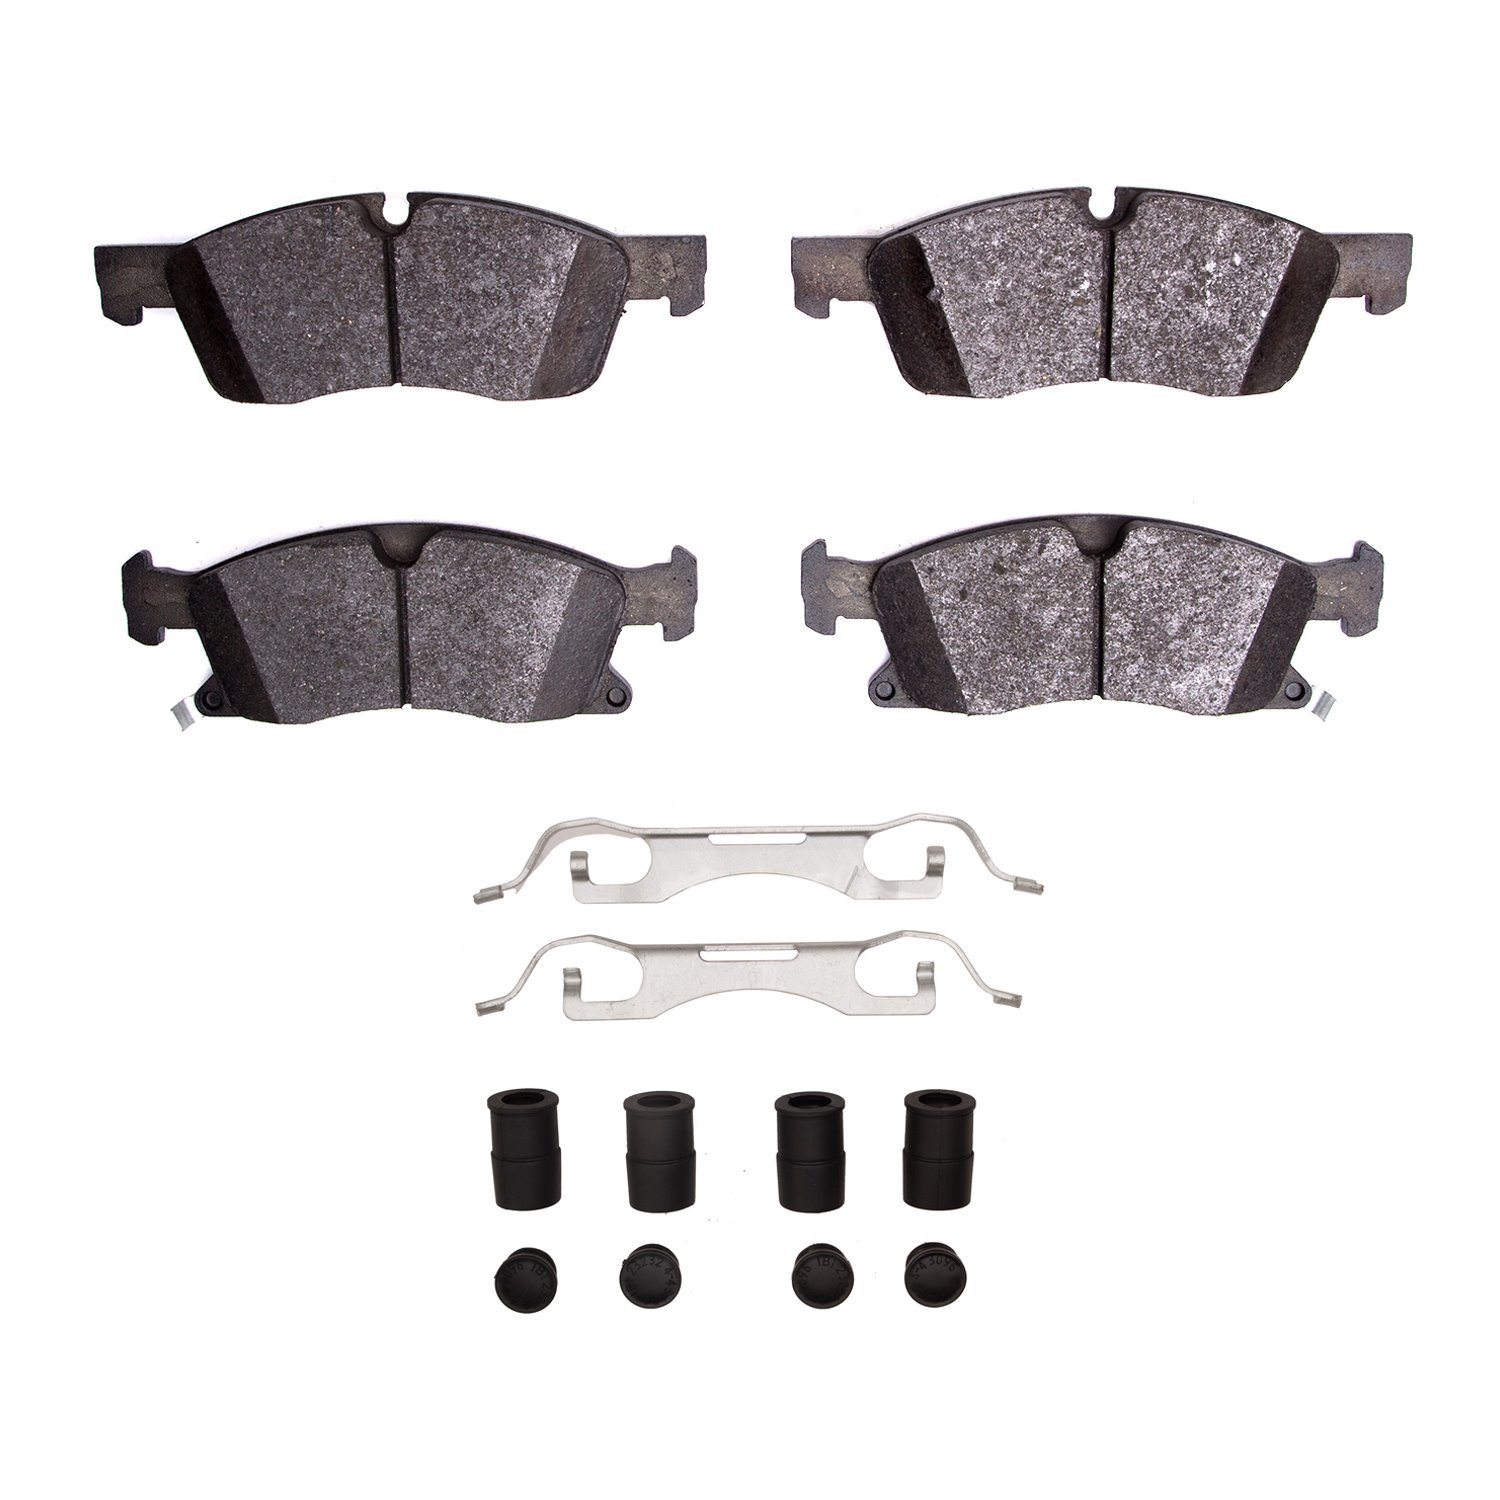 1310-1904-01 3000-Series Ceramic Brake Pads & Hardware Kit, Fits Select Mopar, Position: Front